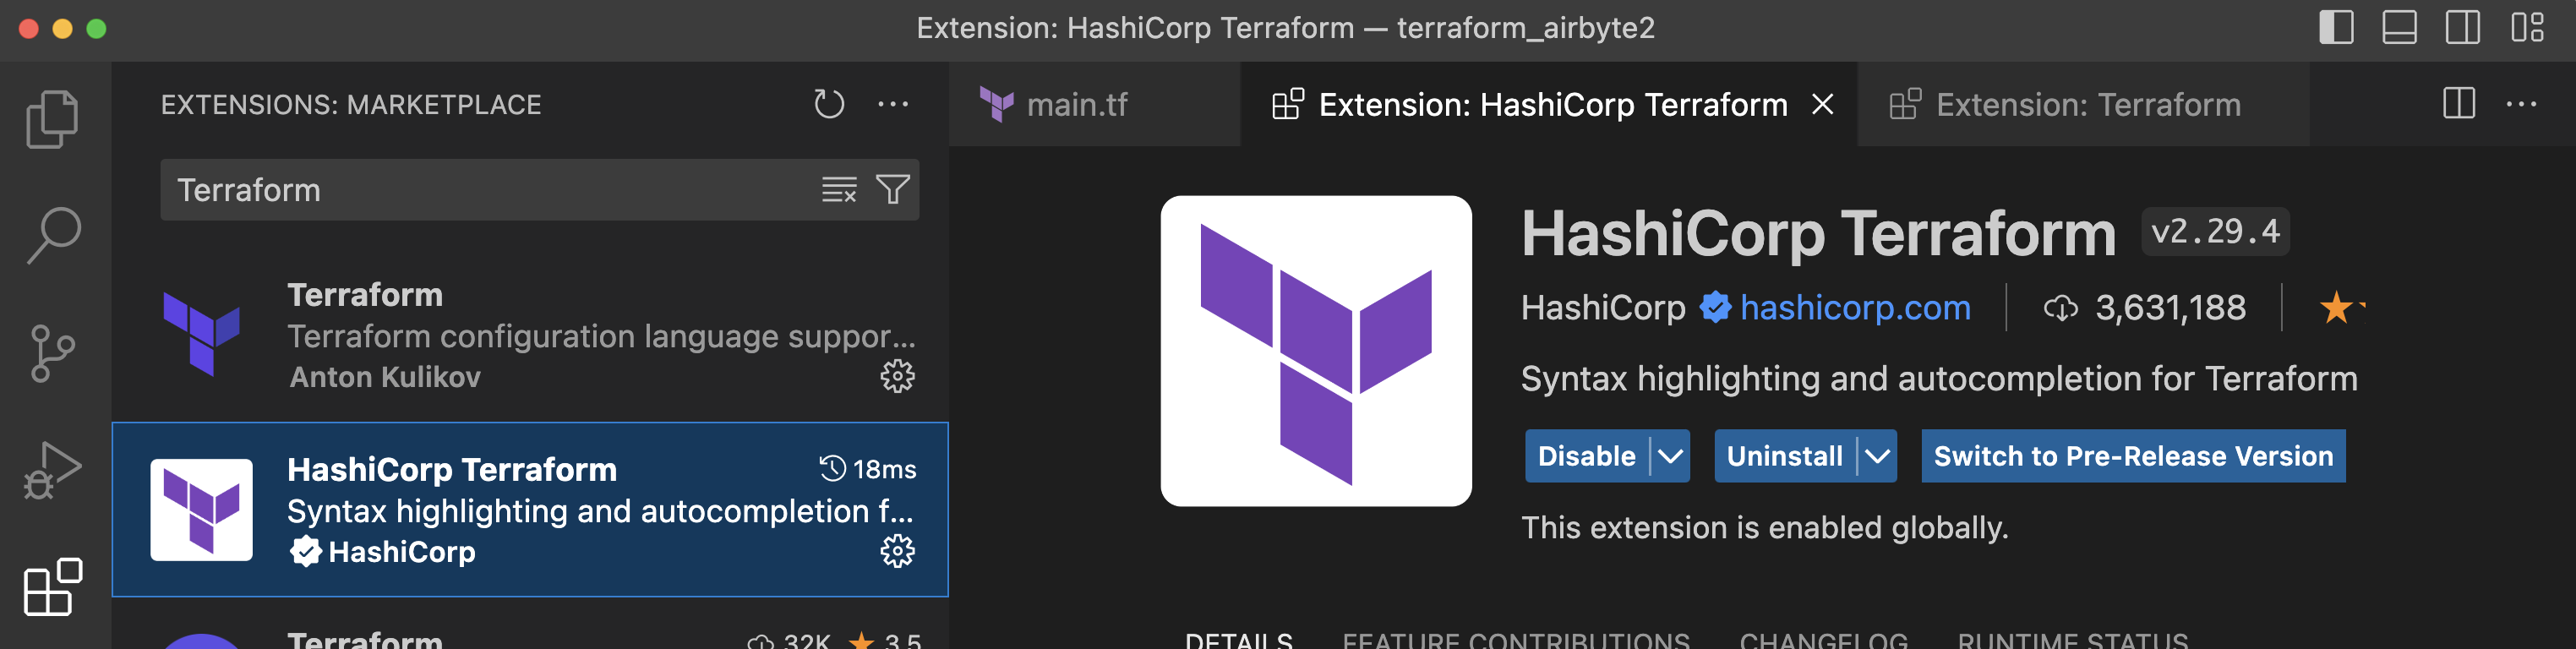 Terraform Extensions on Visual Studio Code